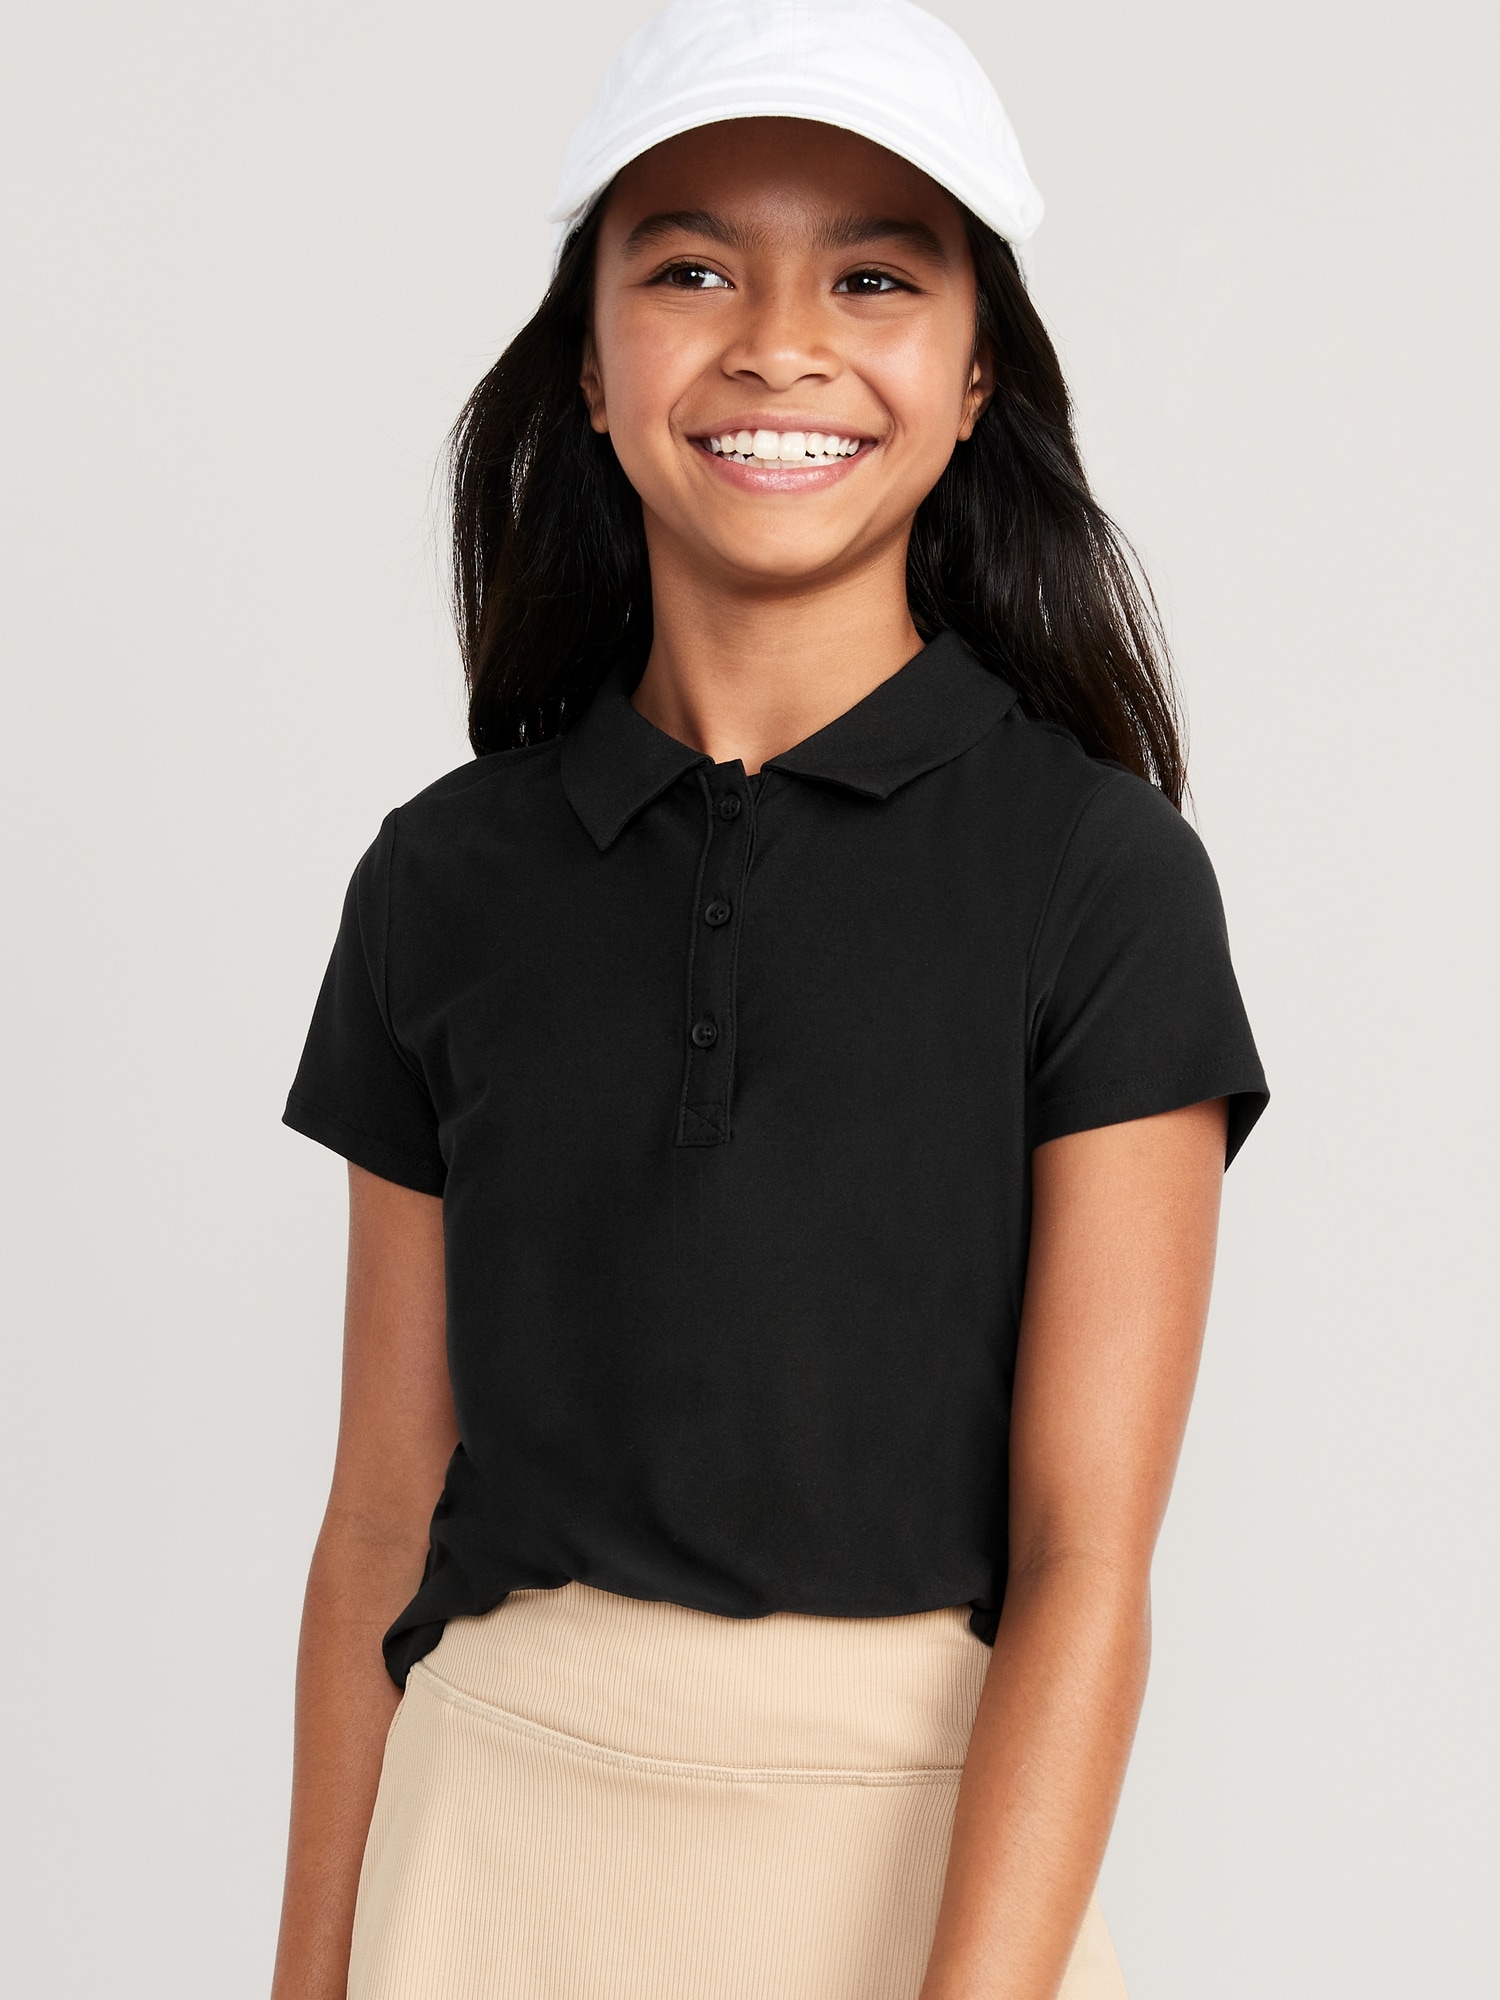 Cloud 94 Soft School Uniform Polo Shirt for Girls | Old Navy